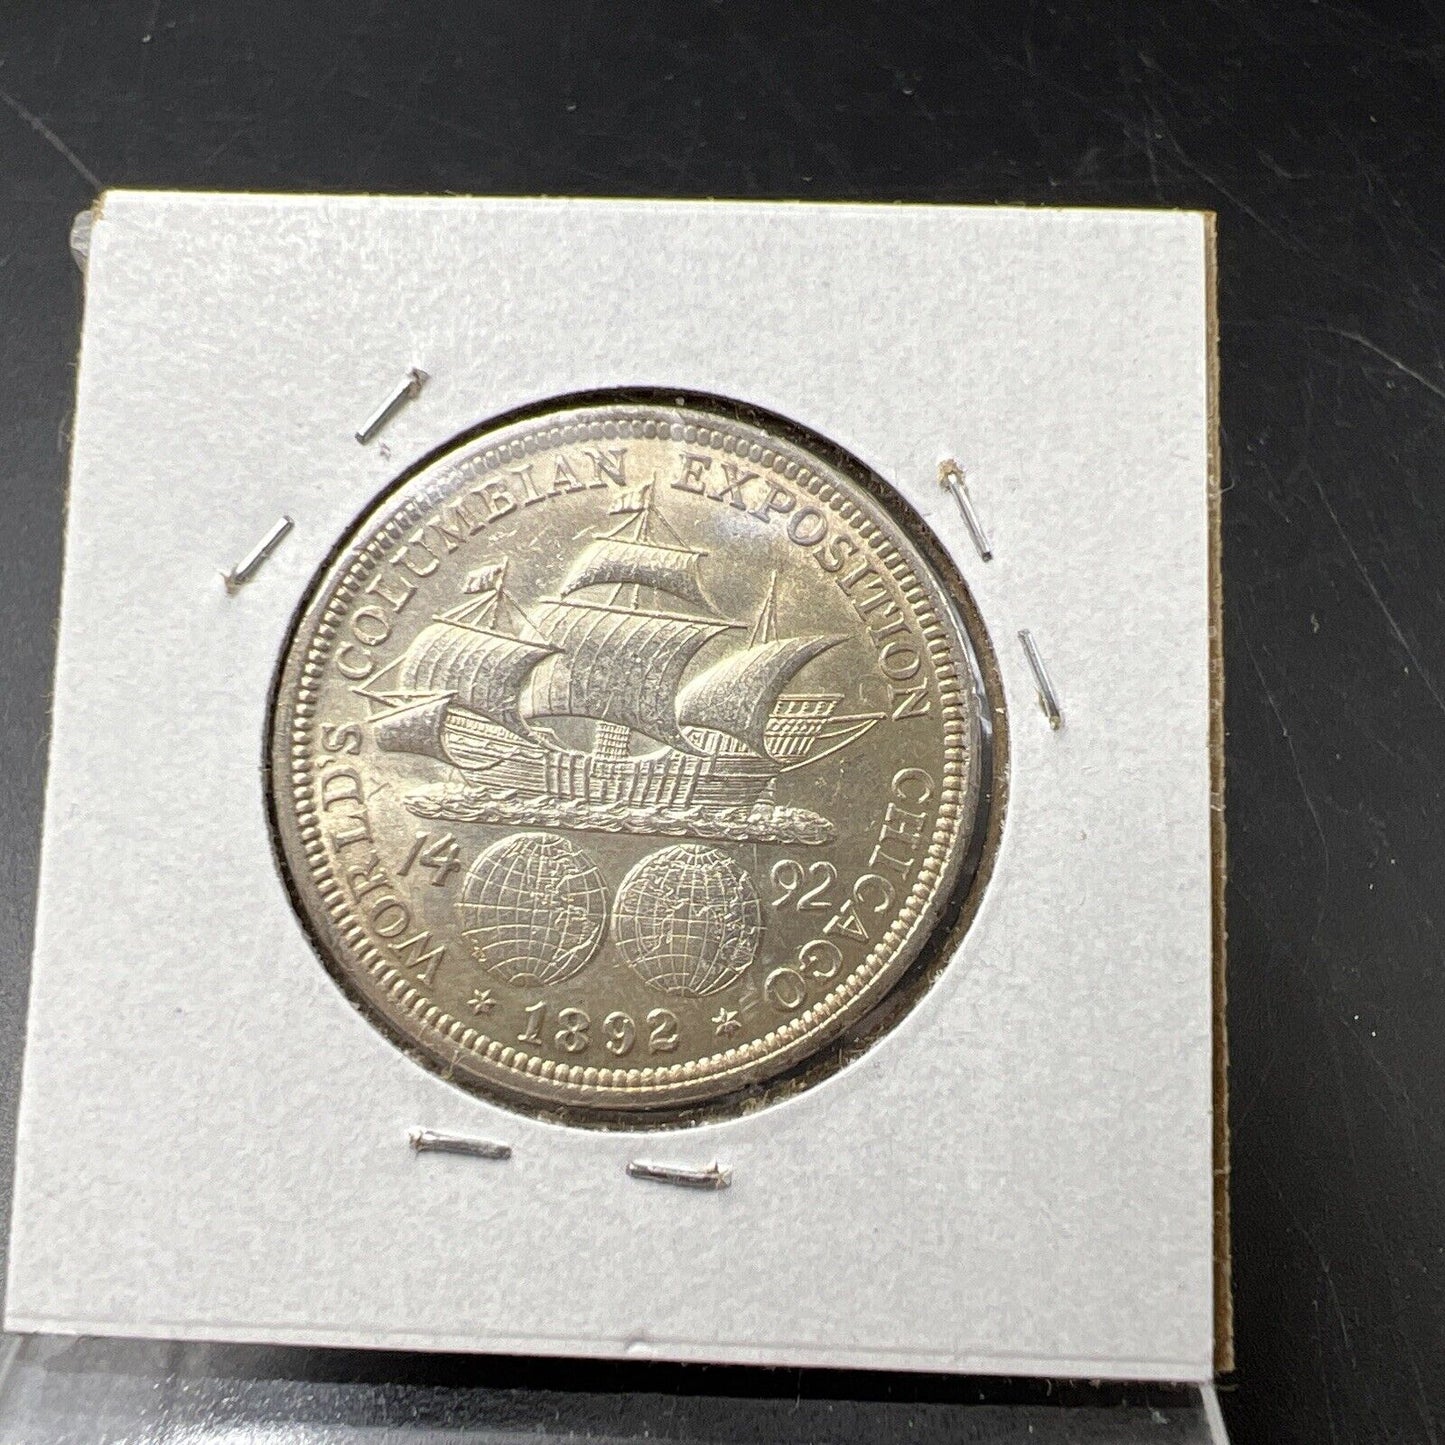 1892 Columbian Classic Commemorative Silver 50c Half Dollar Coin BU UNC